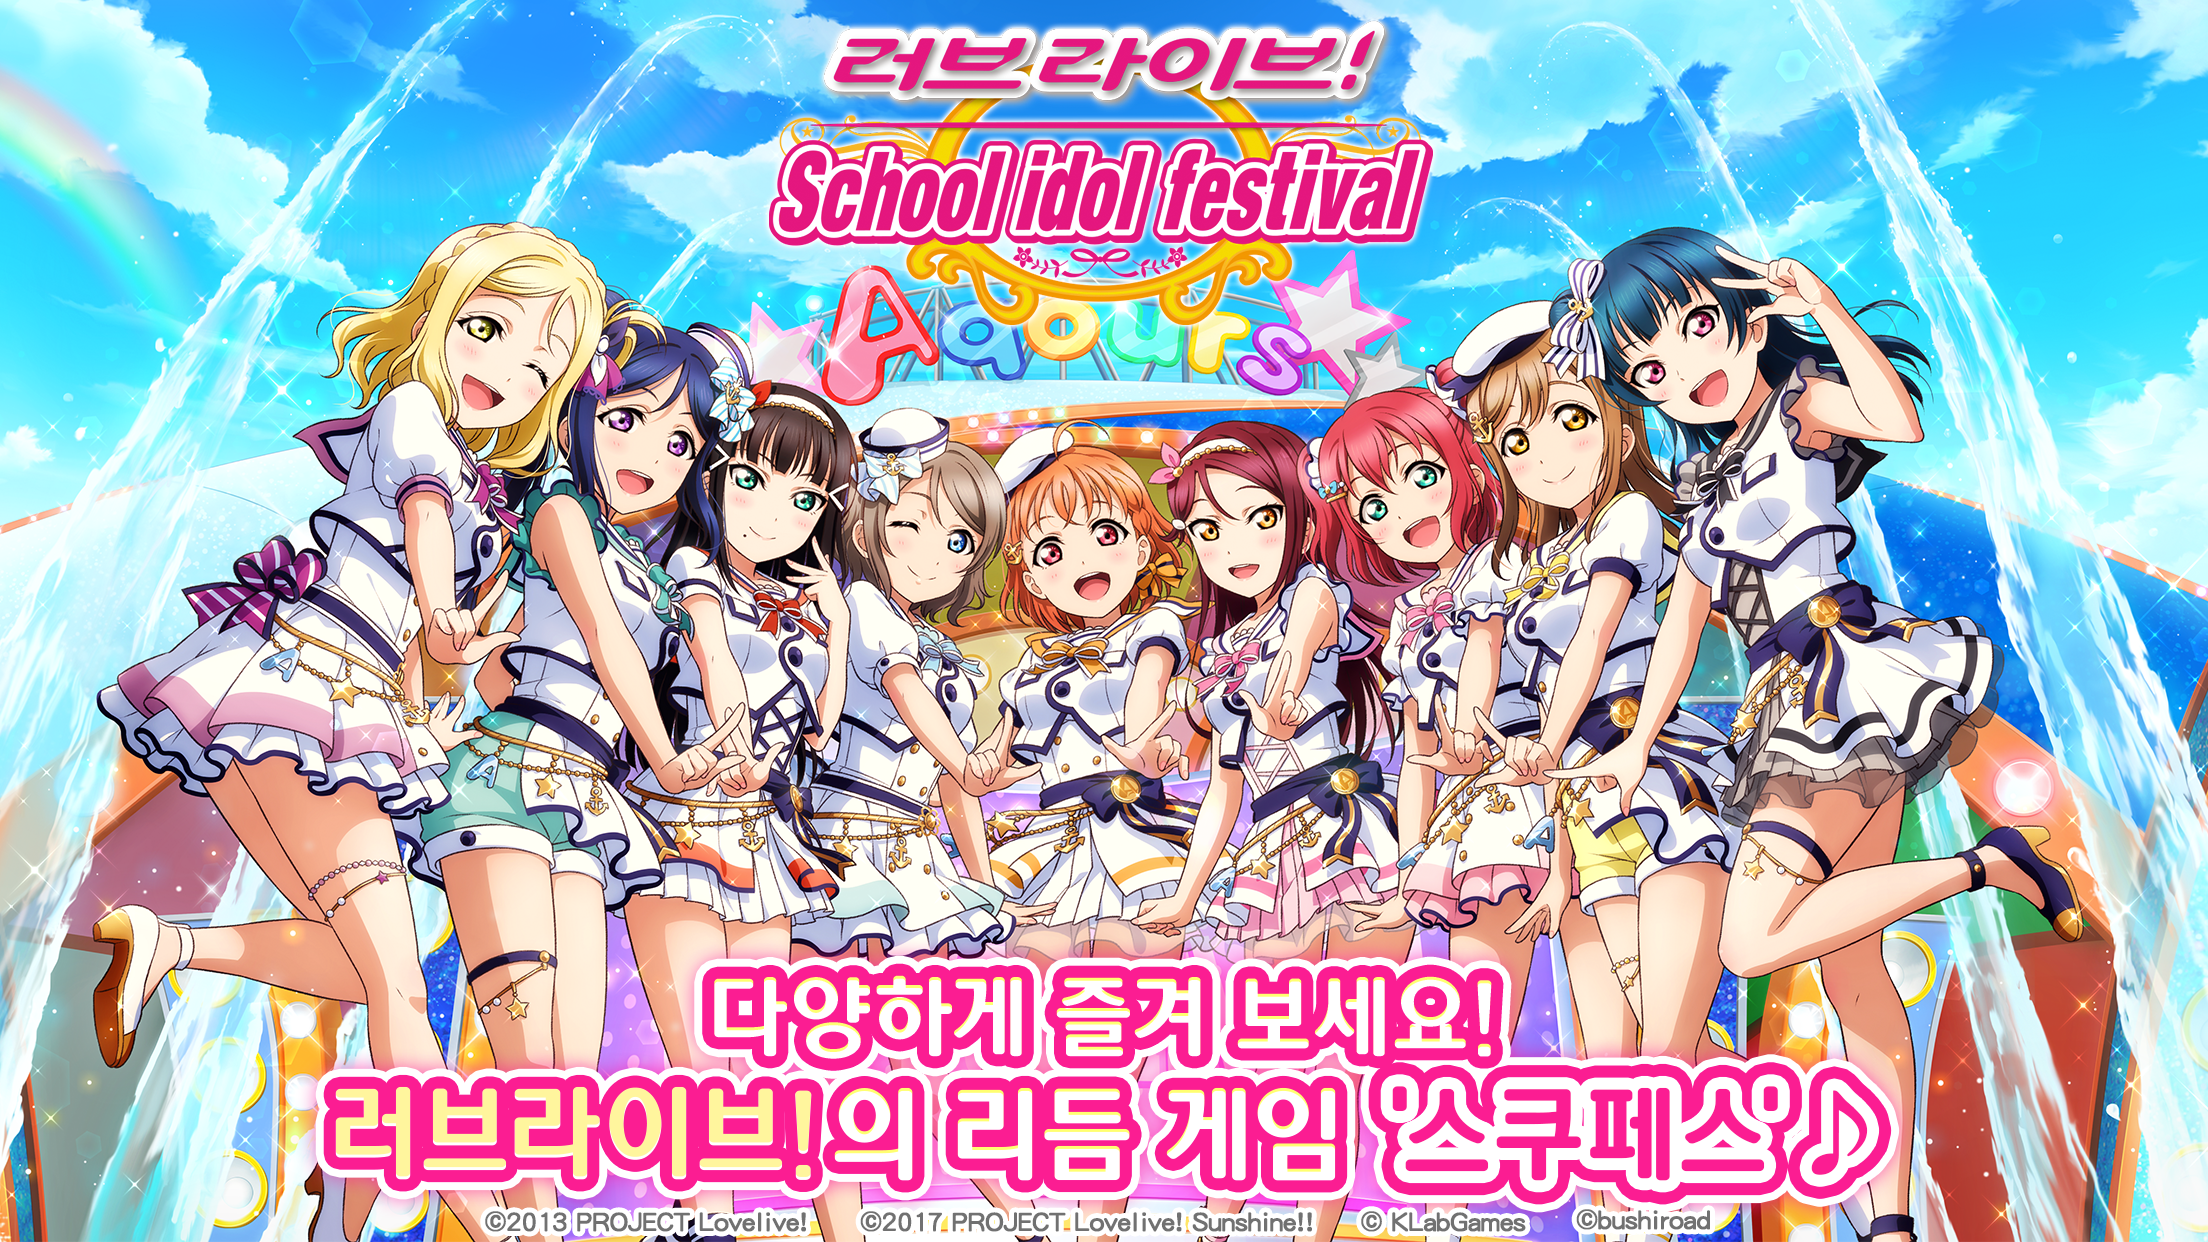 Screenshot 1 of Amar viver! School idol festival - jogo de ritmo musical 7.1.0